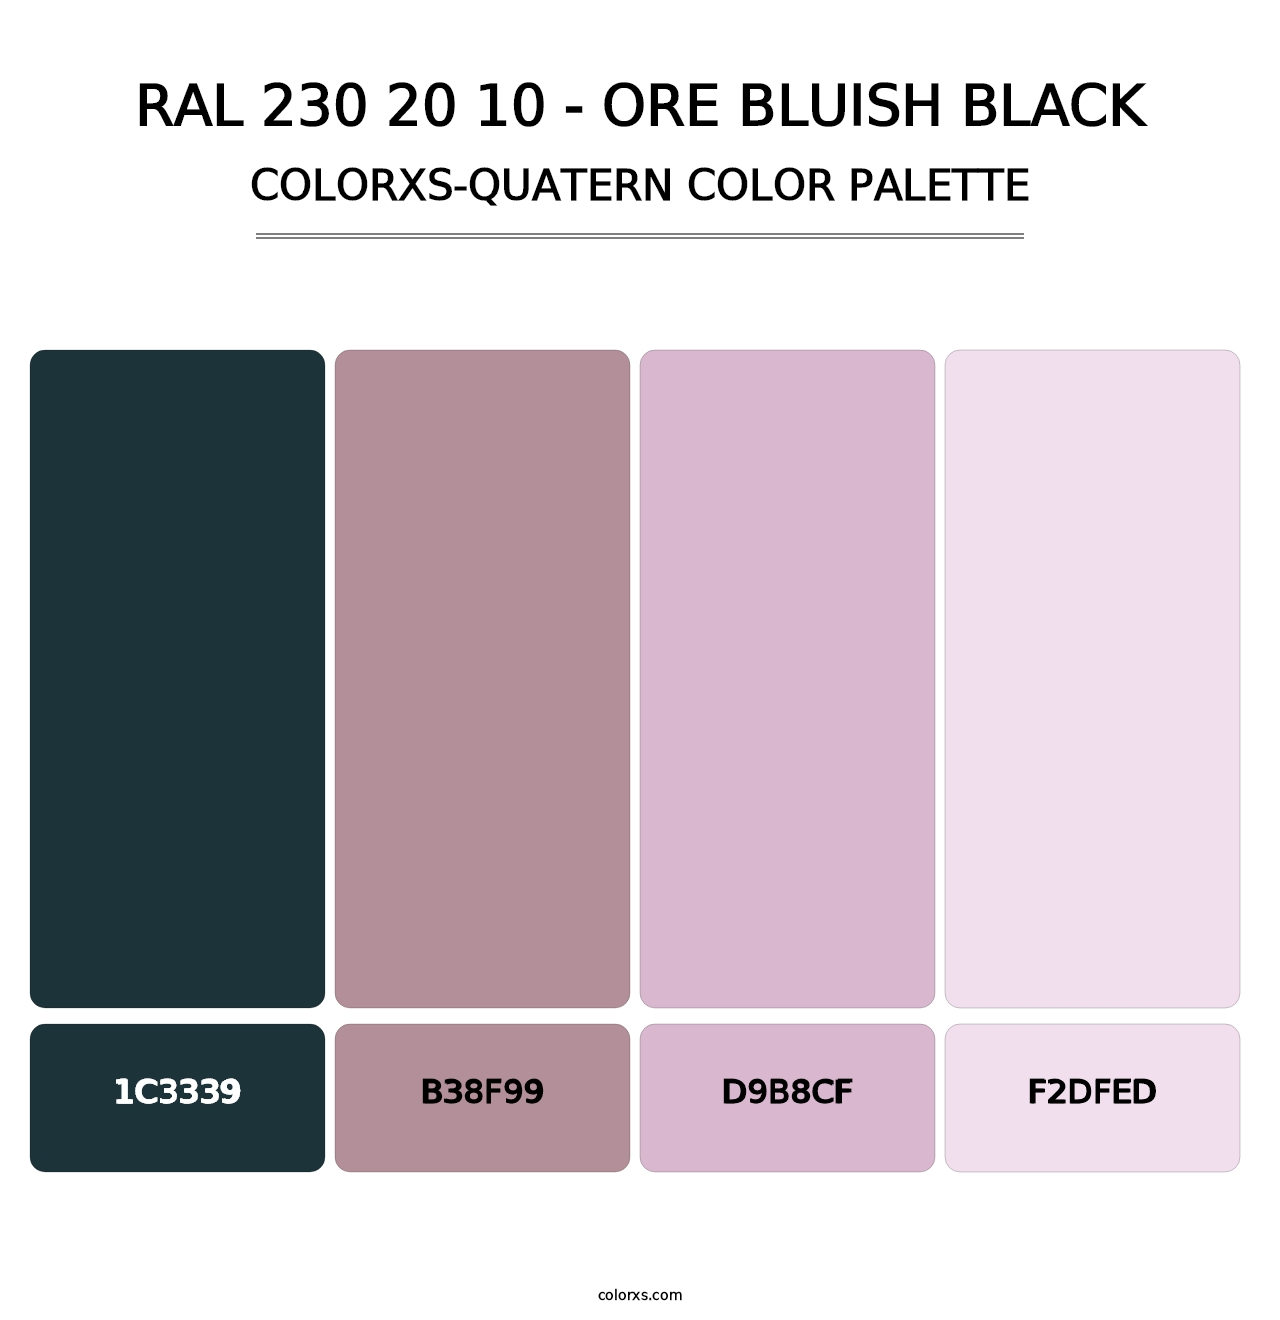 RAL 230 20 10 - Ore Bluish Black - Colorxs Quatern Palette